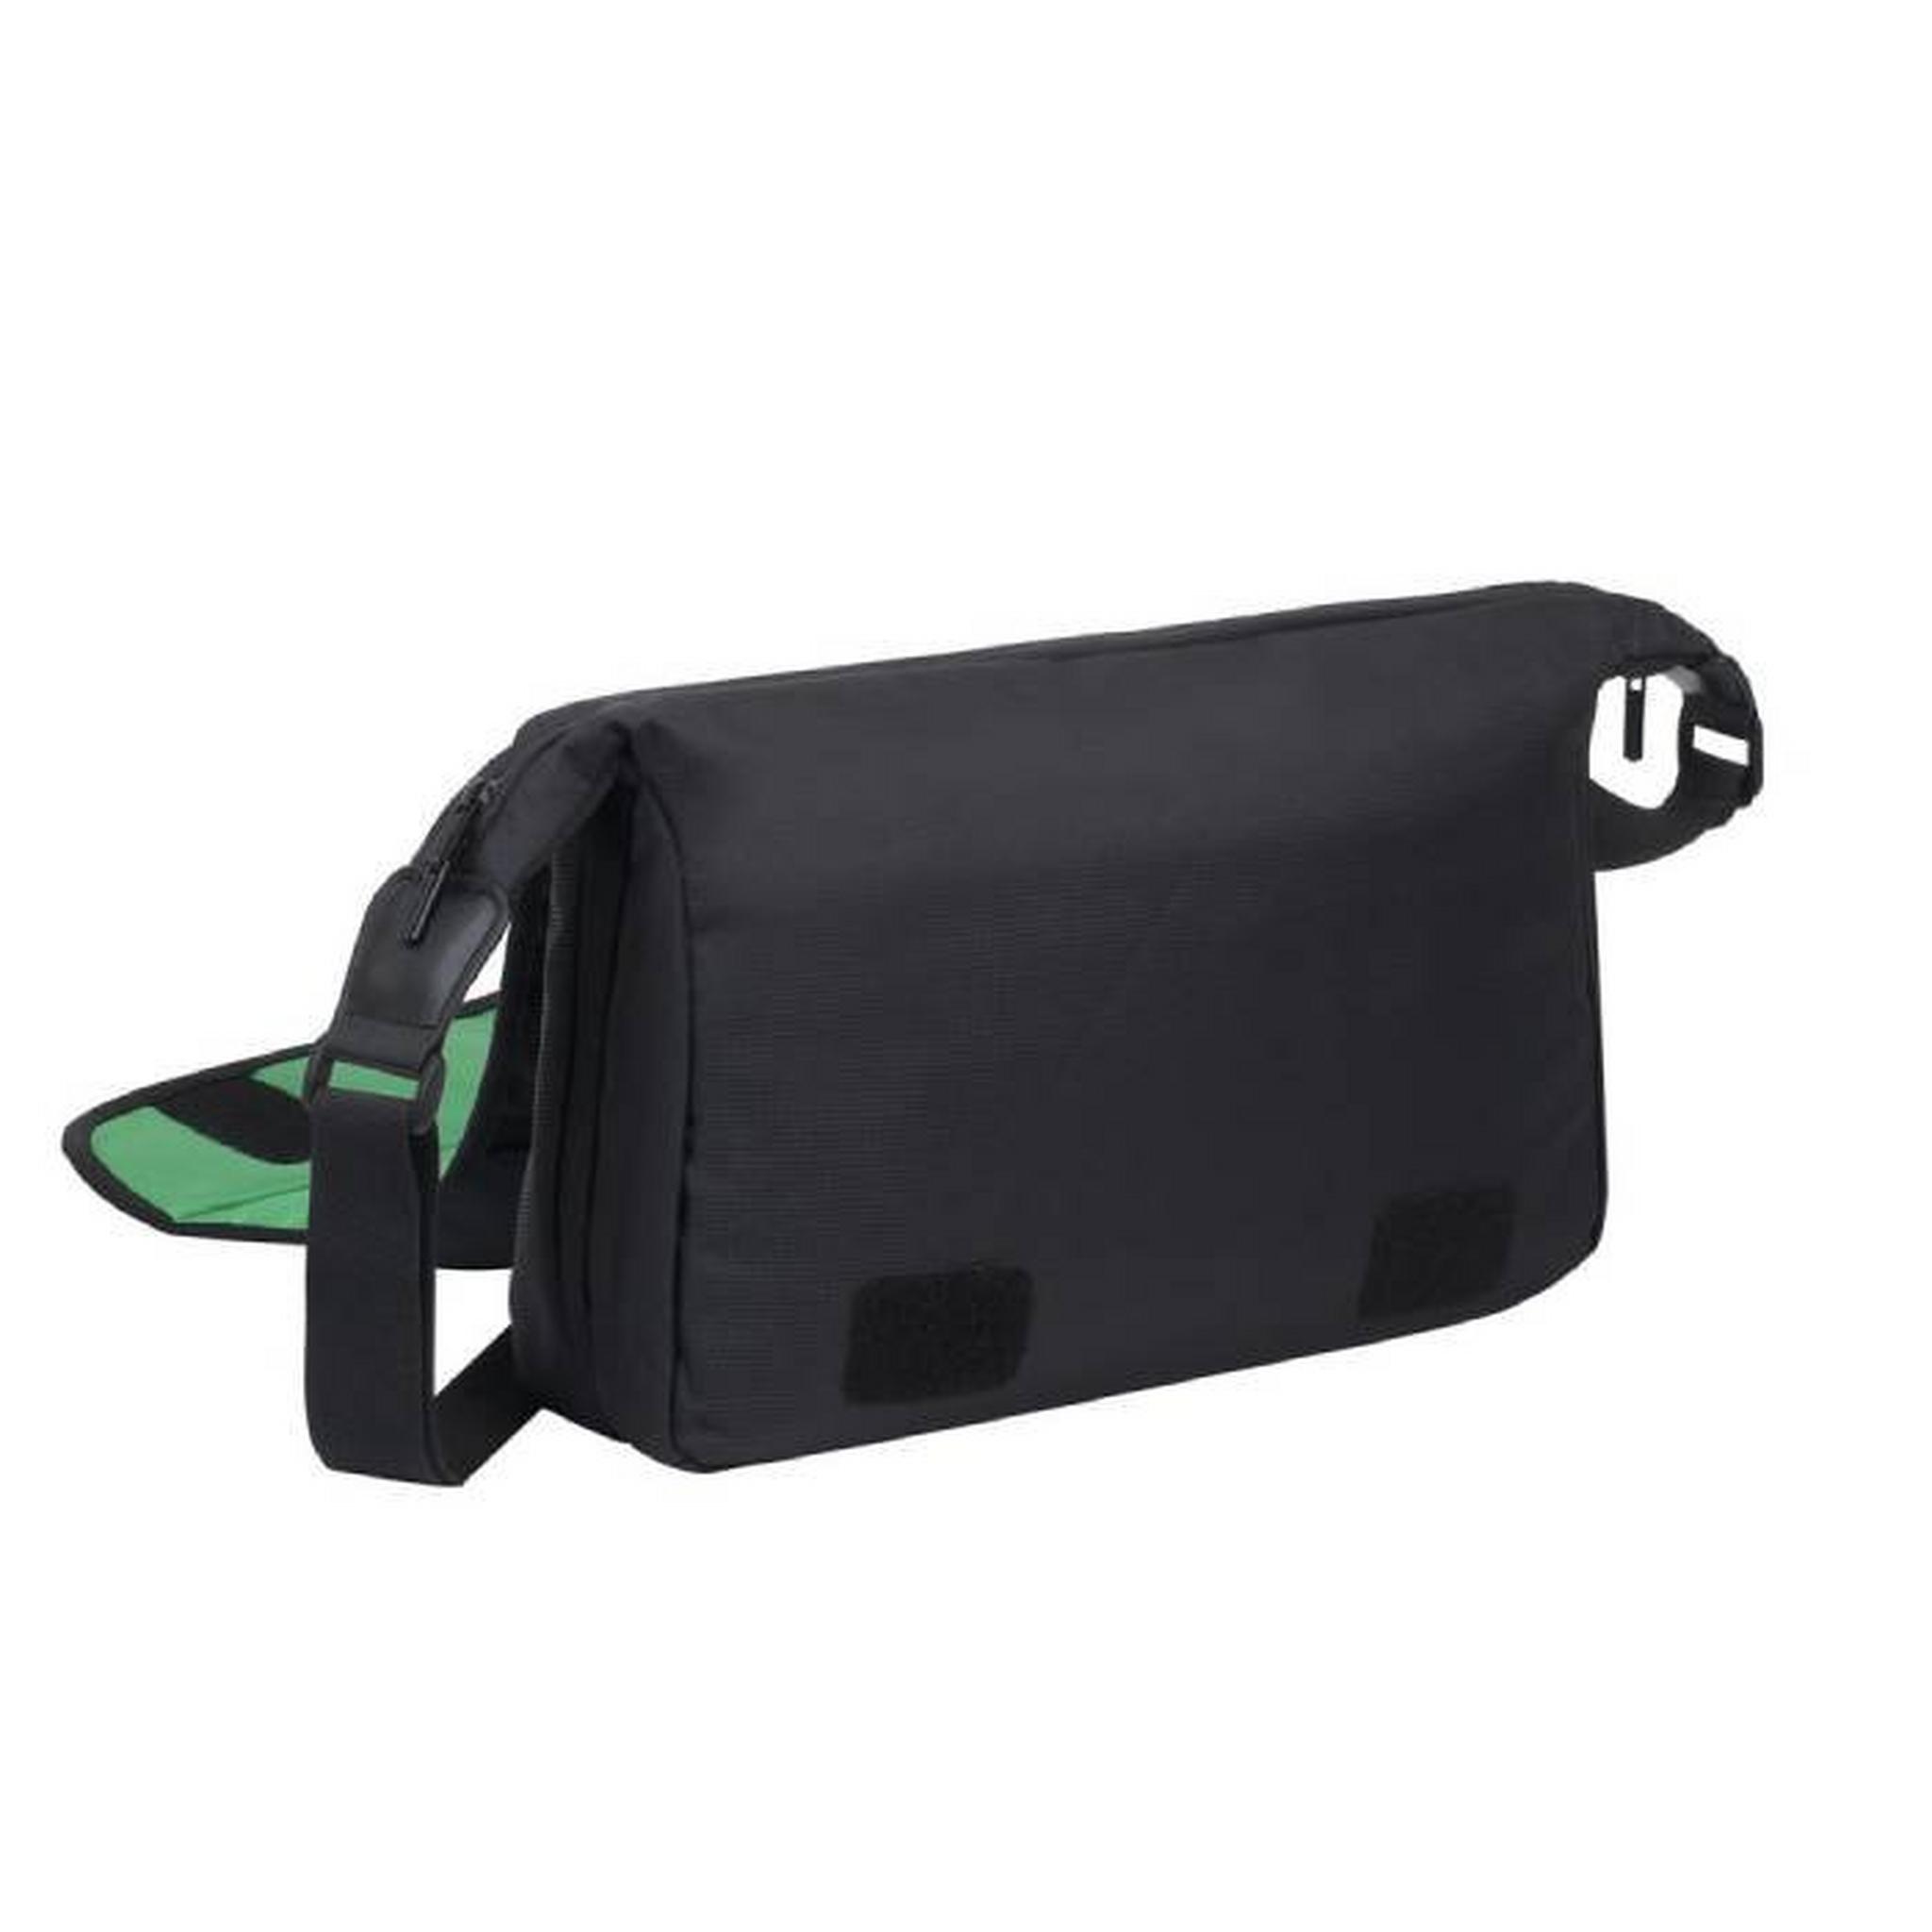 Riva Case Messenger Bag for SLR camera, 7450 (PS) BLACK – Black/Green